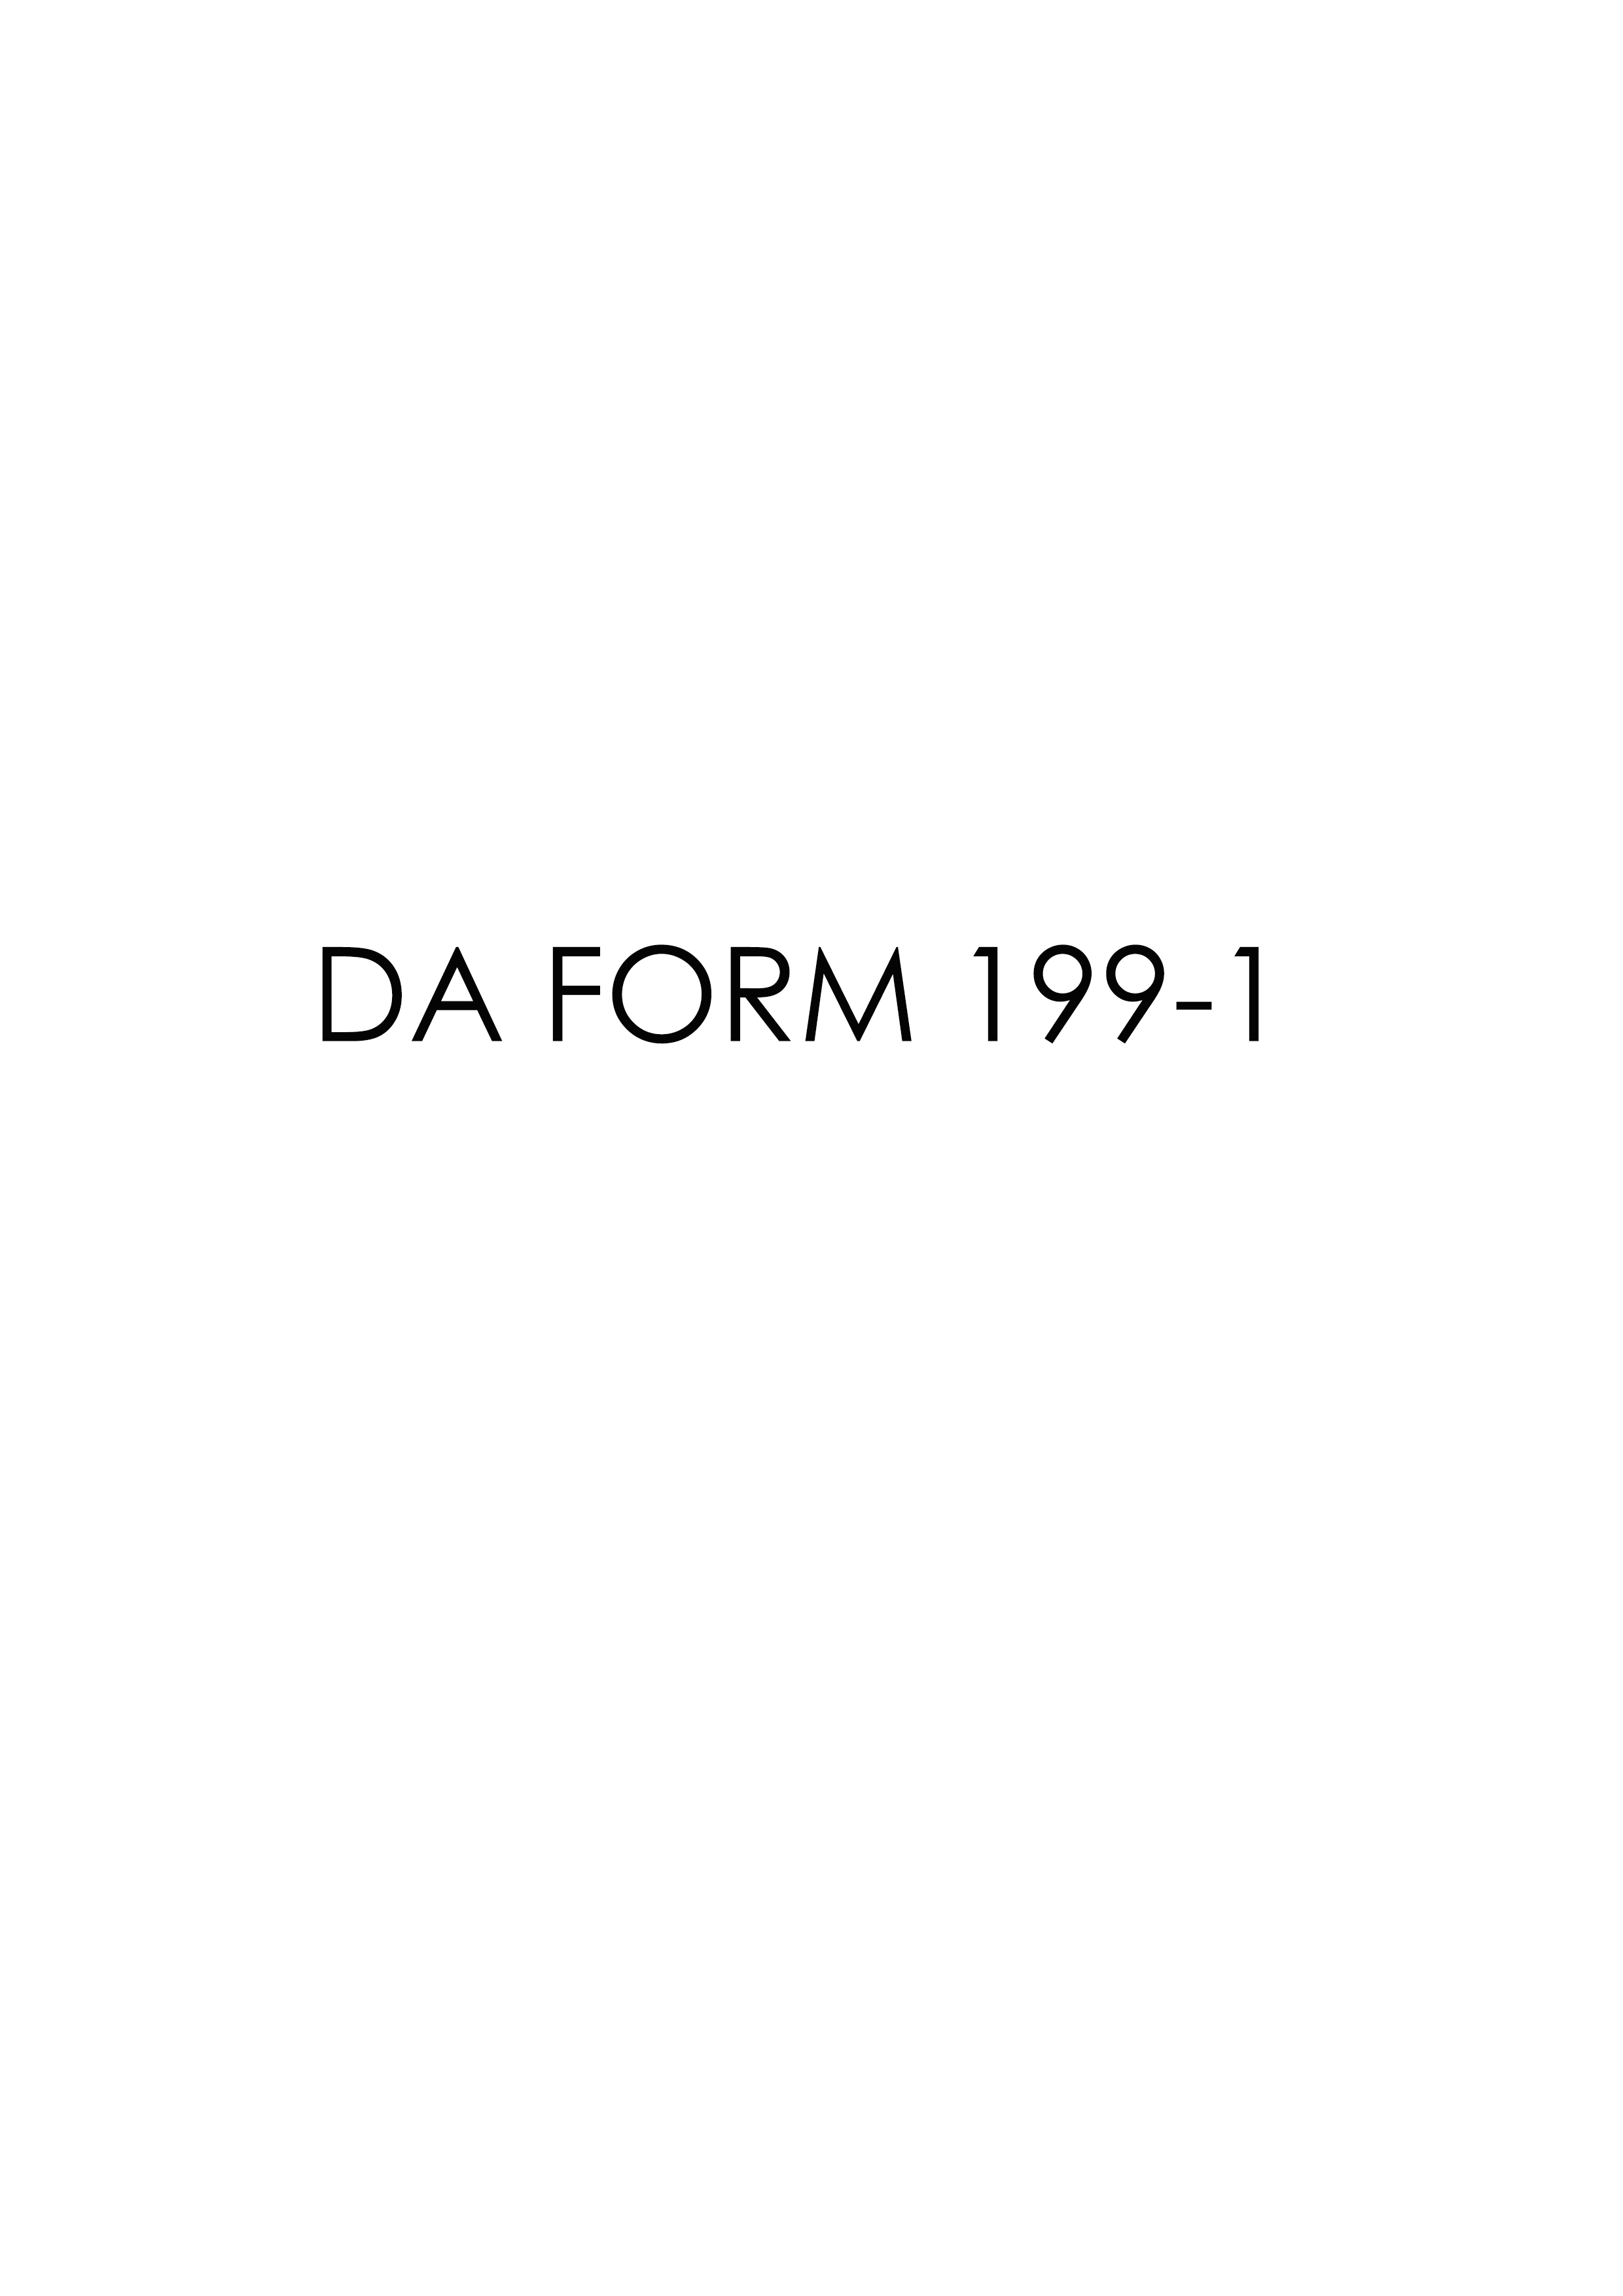 Download da 199-1 Form Free